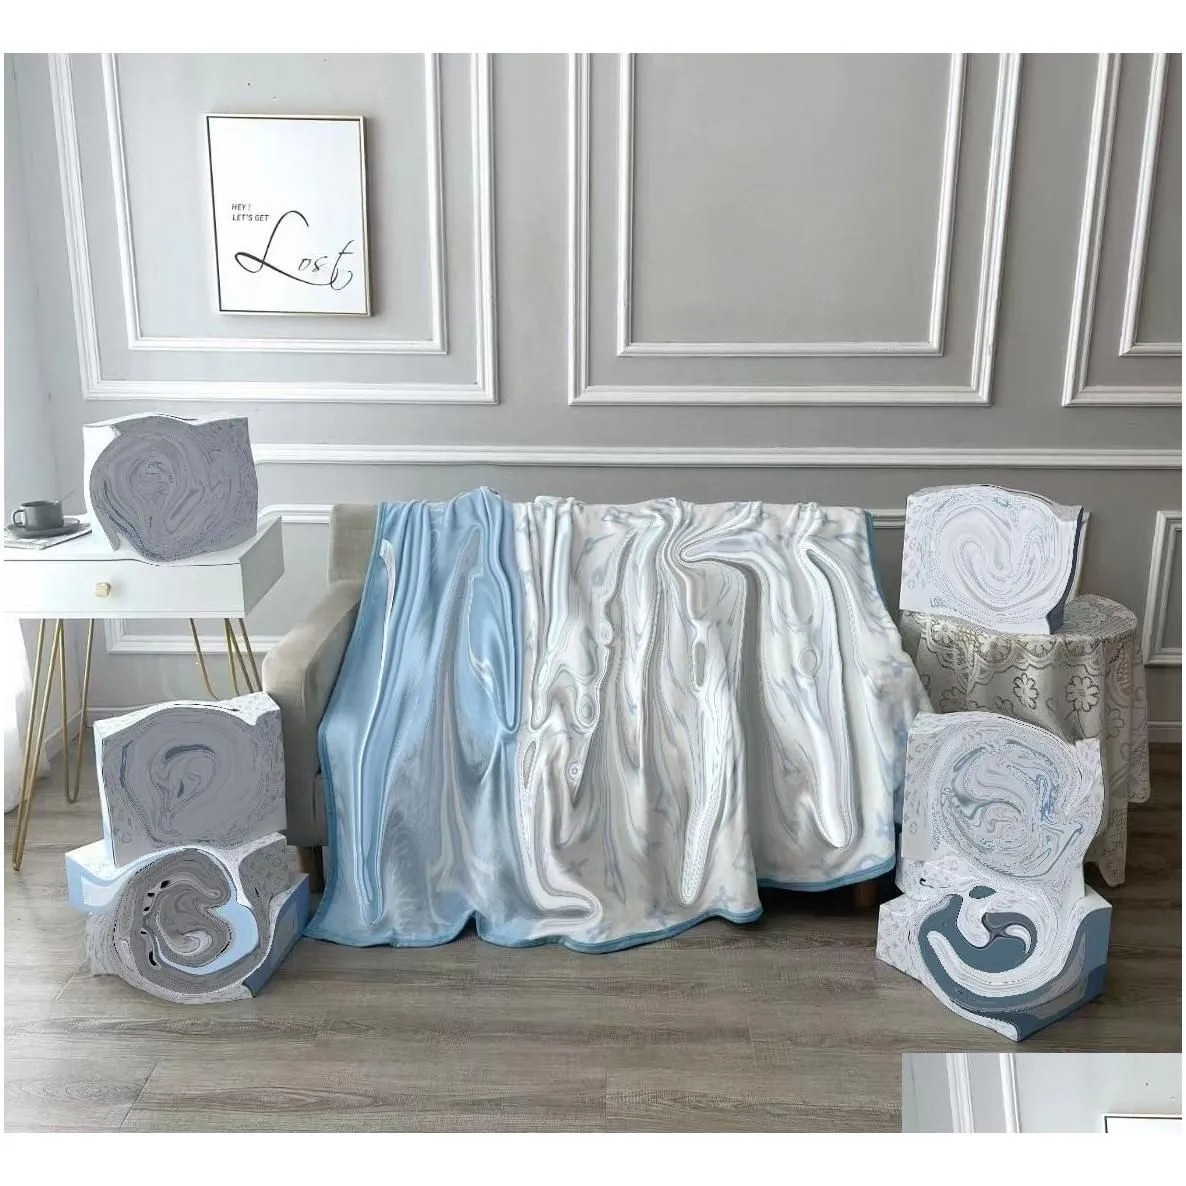 Blankets Designer Blanket 150X200Cm Brand Letter L Air Fashion Conditioning Travel Bath Towel Soft Winter Fleece Shawl Throw Ht1521